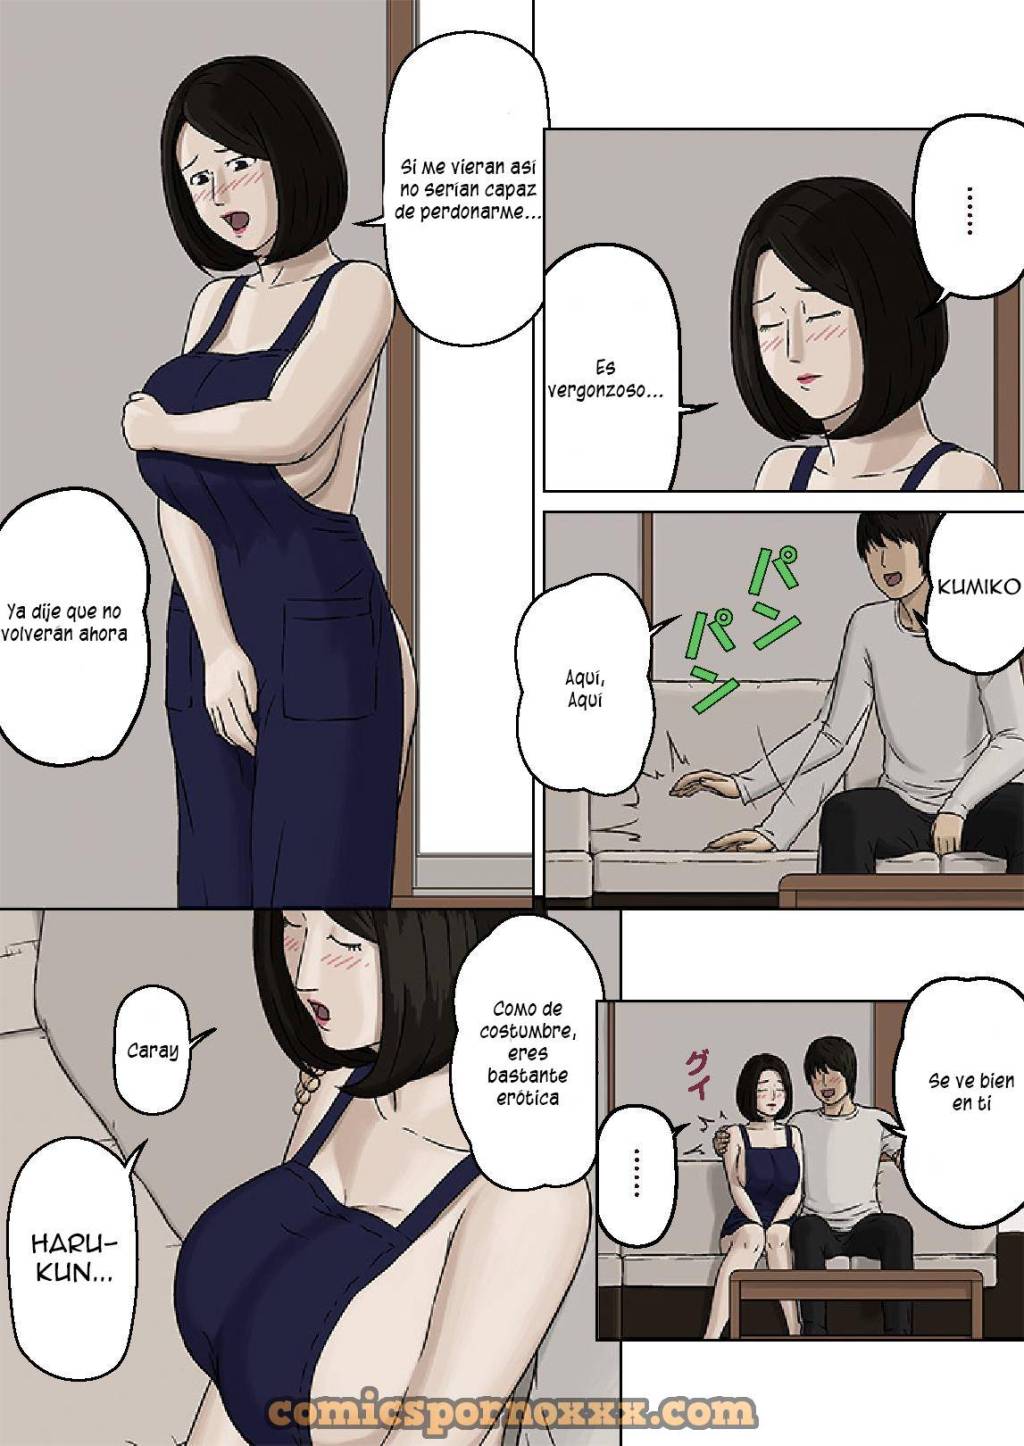 Kumiko And Her Naughty Son - 7 - Comics Porno - Hentai Manga - Cartoon XXX